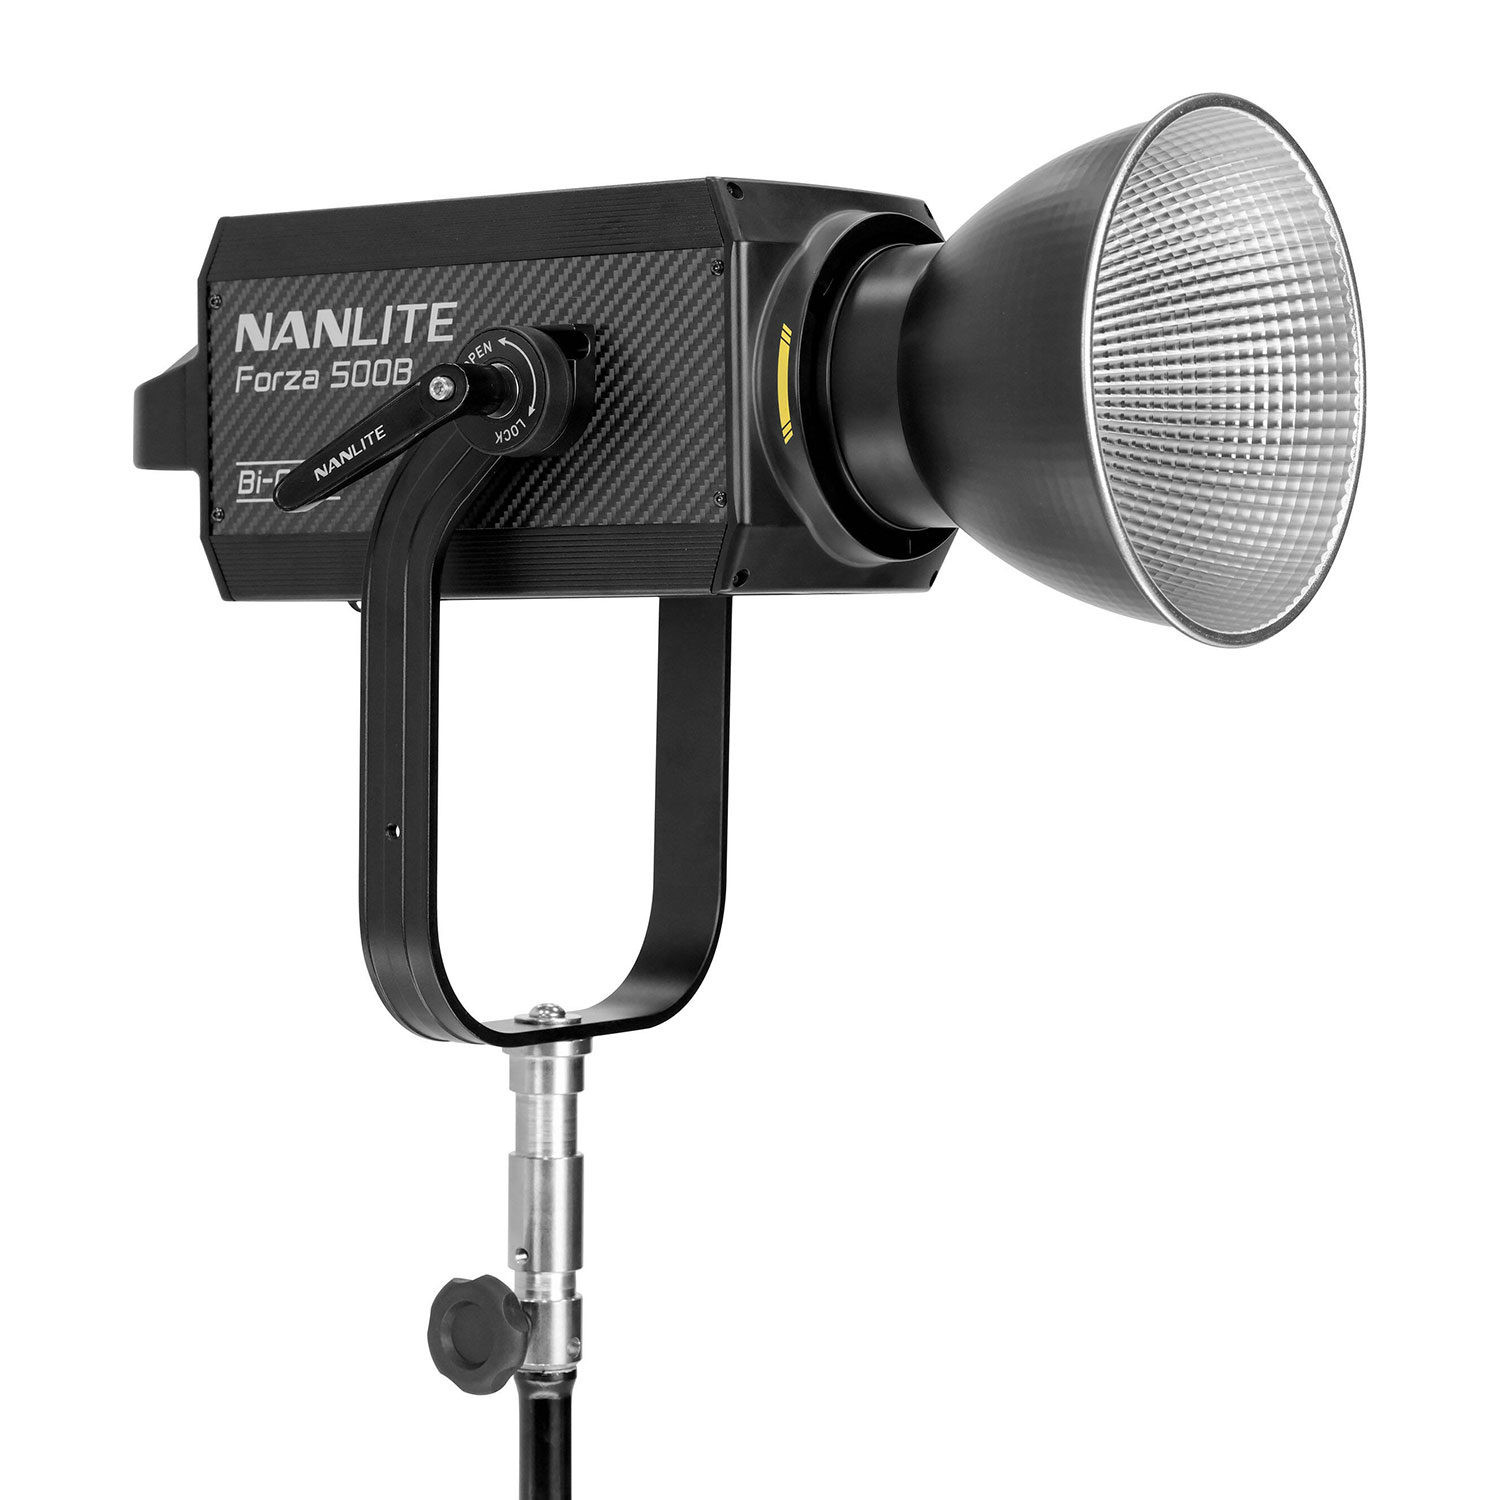 Nanlite Forza 500B II Bi-color LED Light